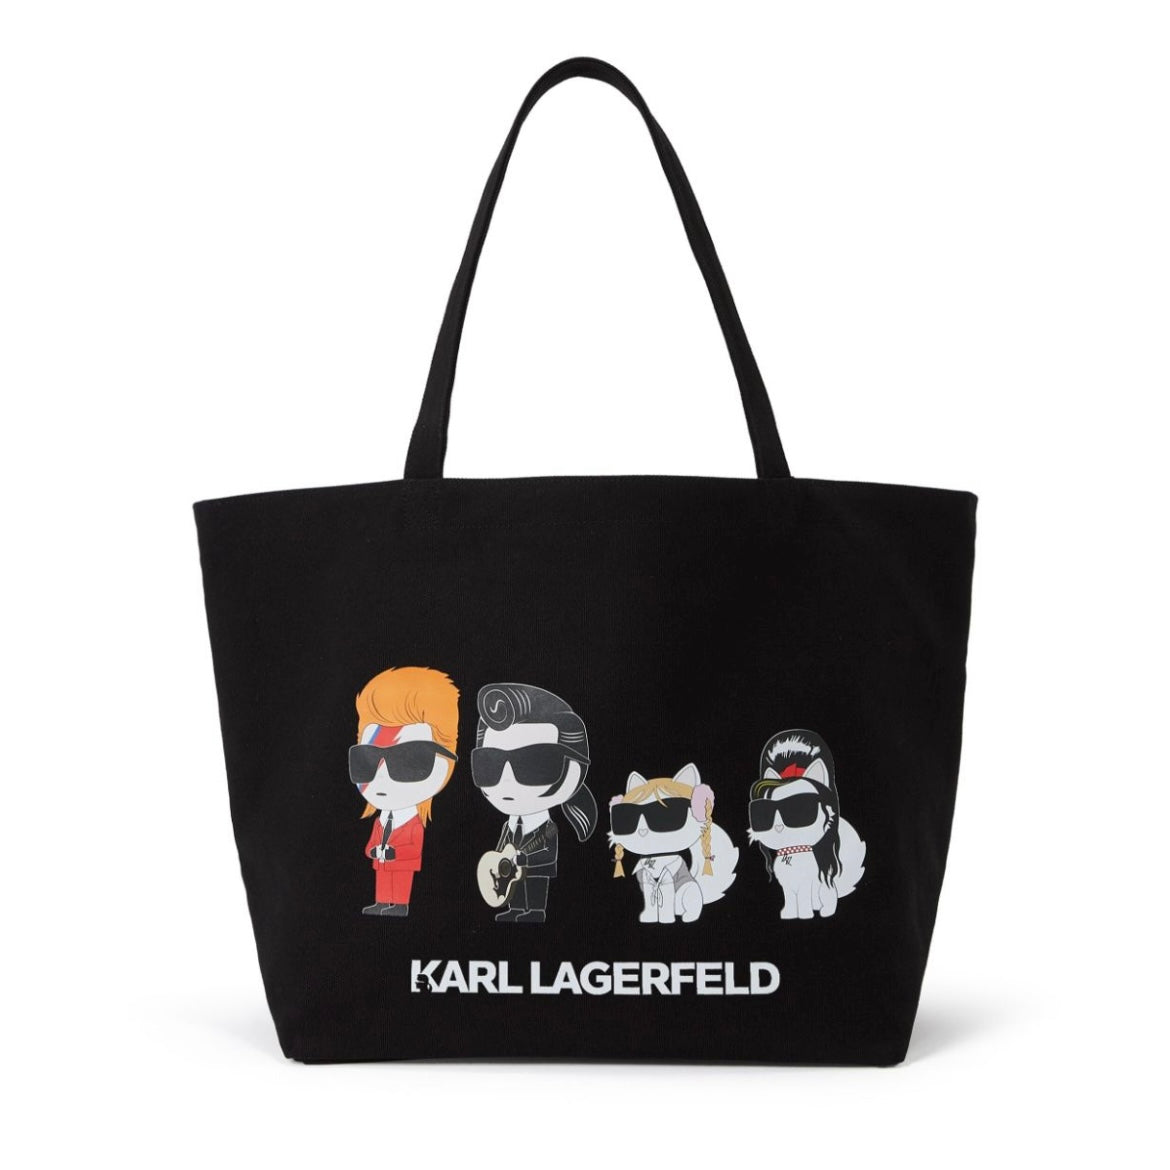 Karl Lagerfeld ikonic superstars tote